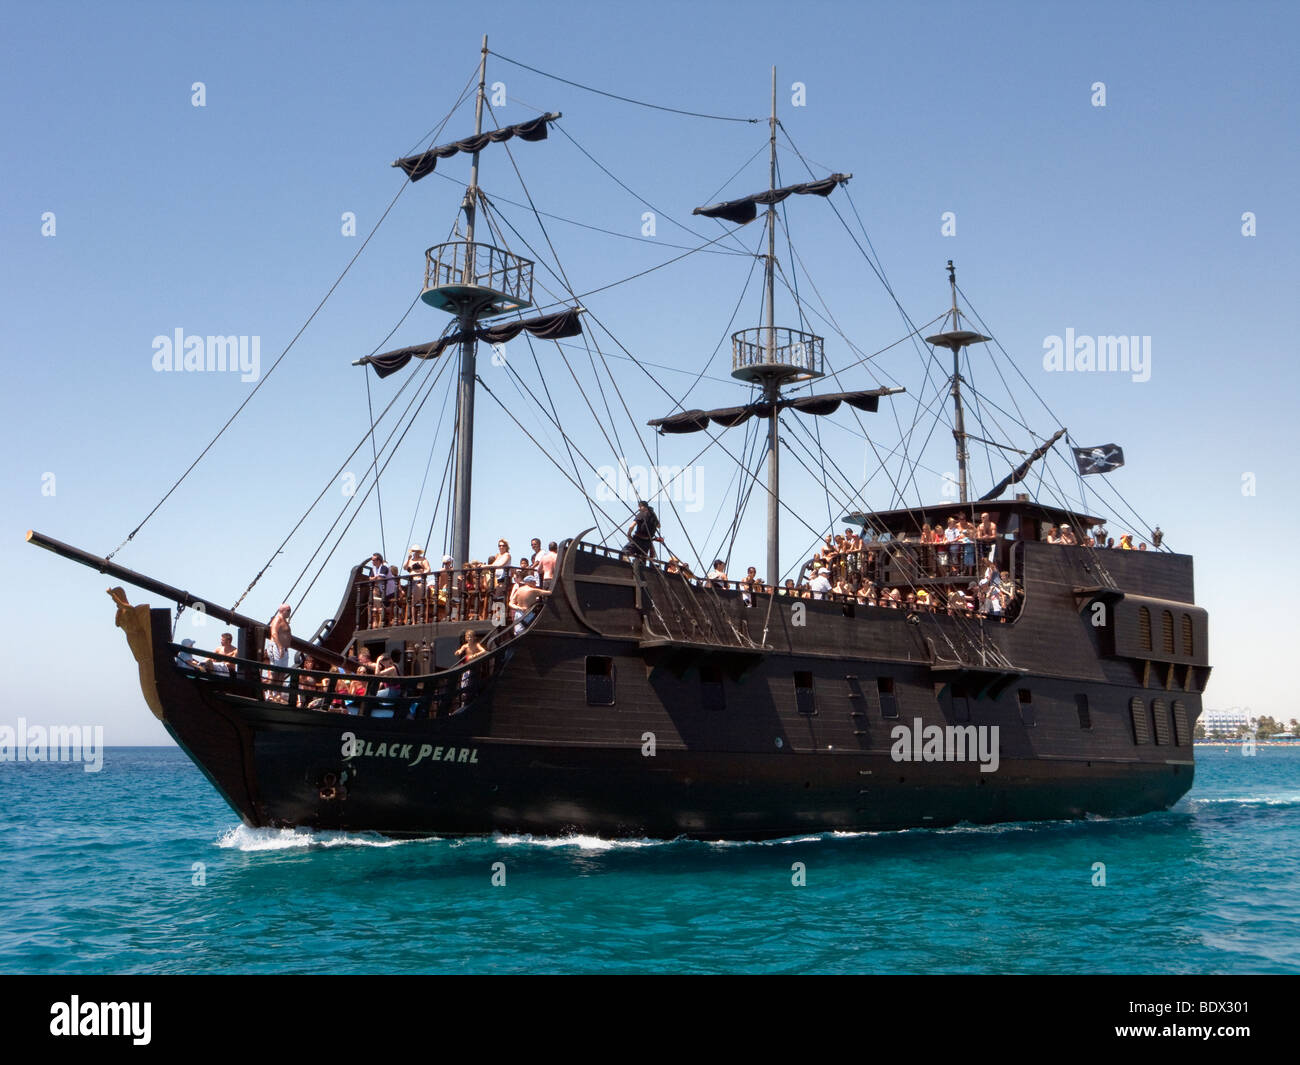 The Black Pearl, a tourist day-cruise ship at Ayia Napa, Cyprus. Stock Photo